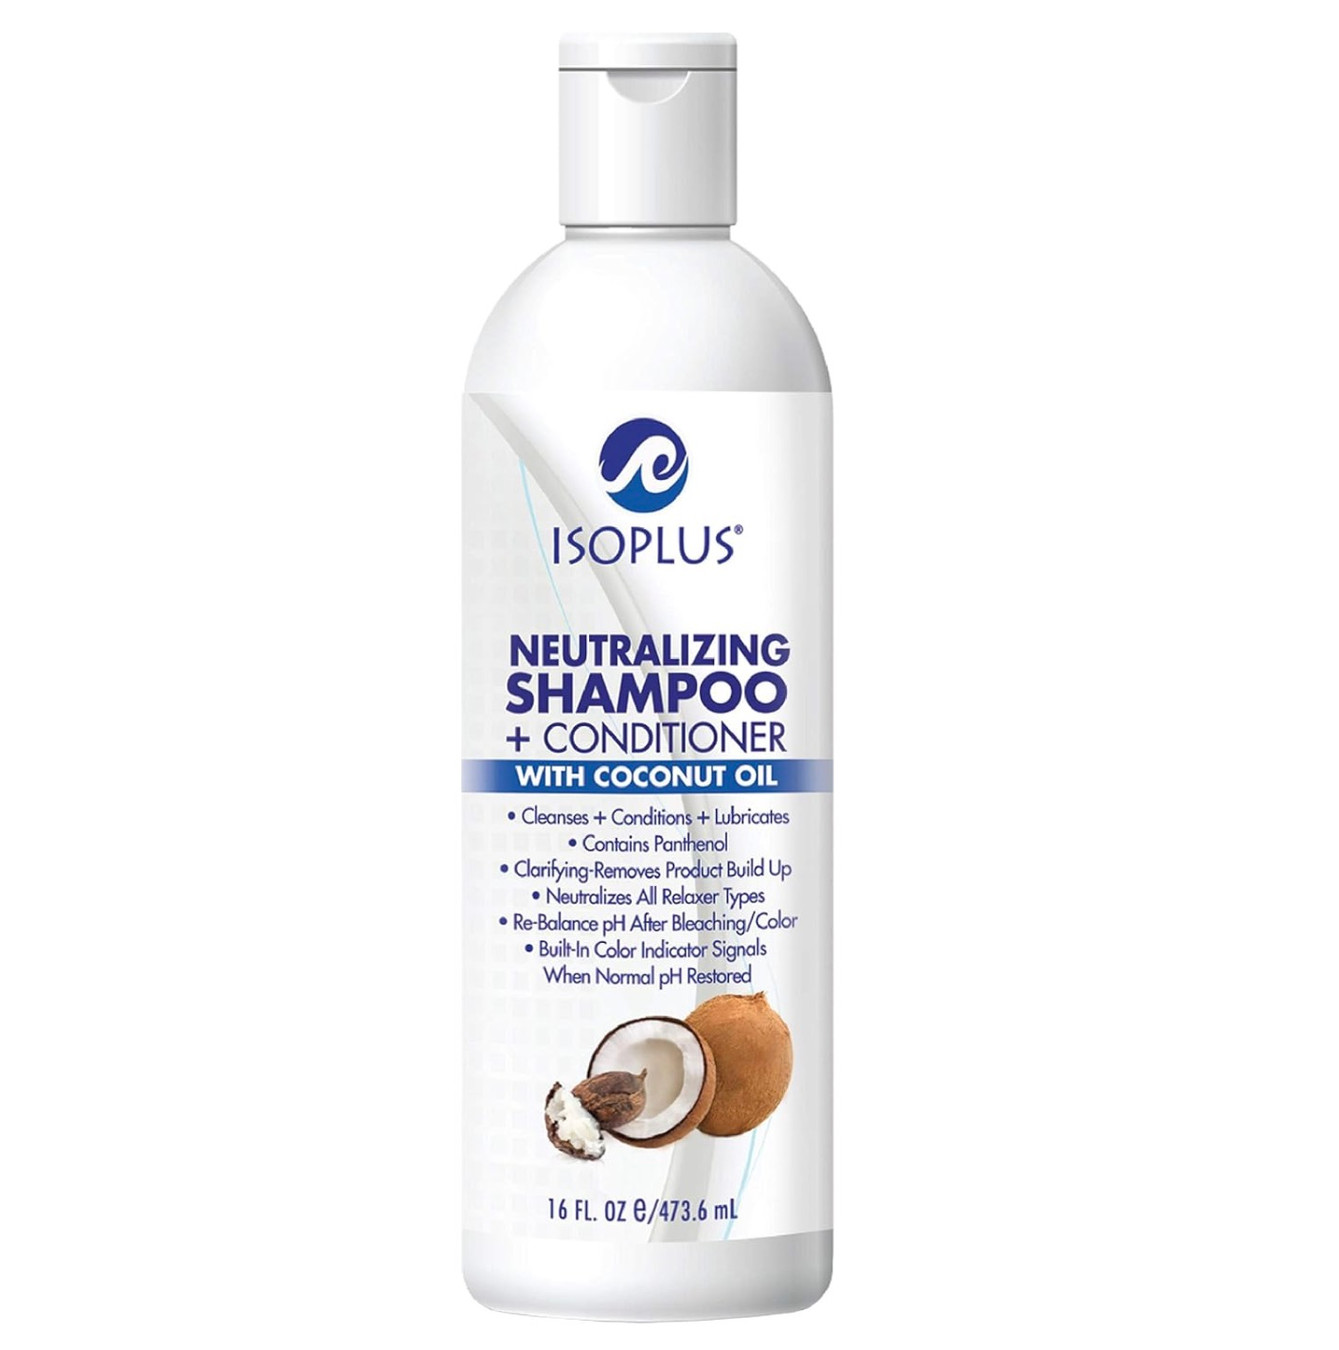 ISOPLUS Neutralizing Shampoo + Conditioner With Coconut Oil (16 oz)